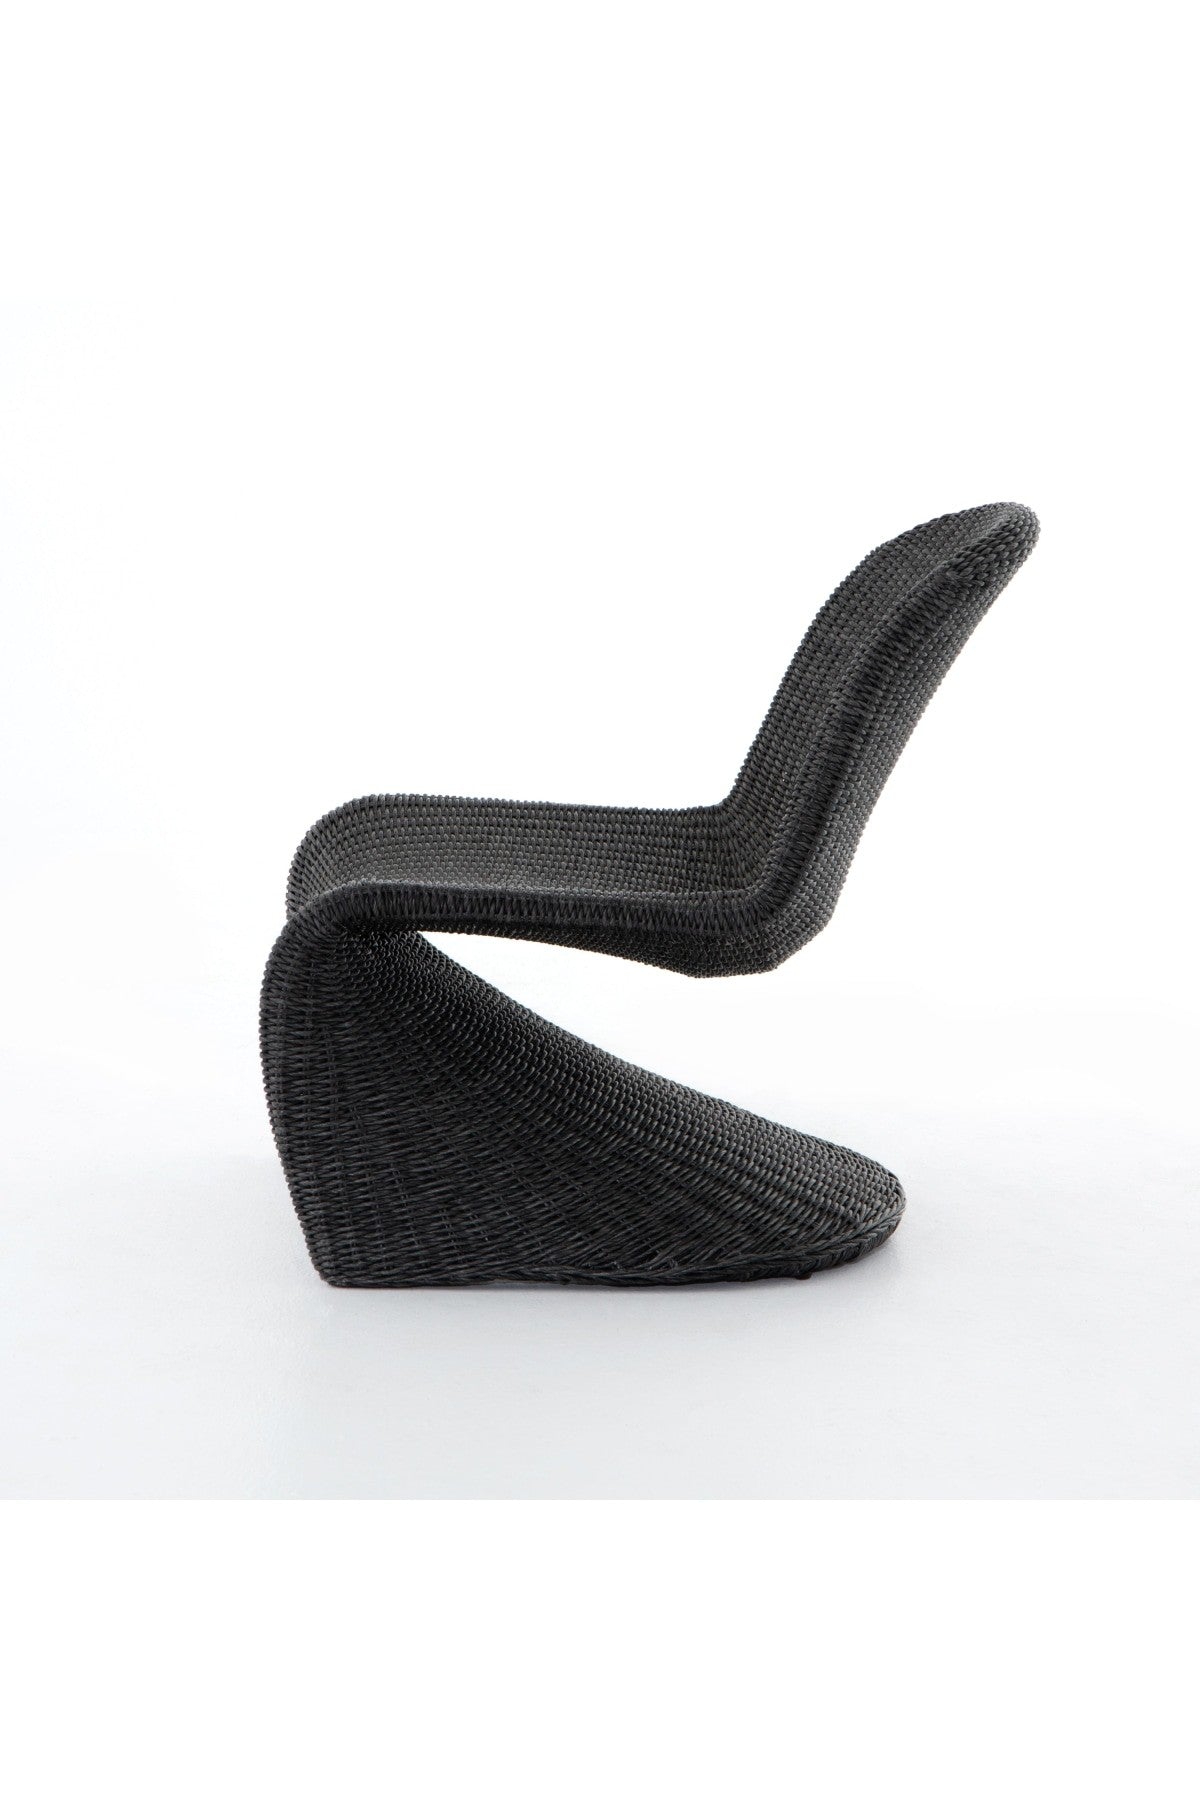 Klein Outdoor Accent Chair - Vintage Coal